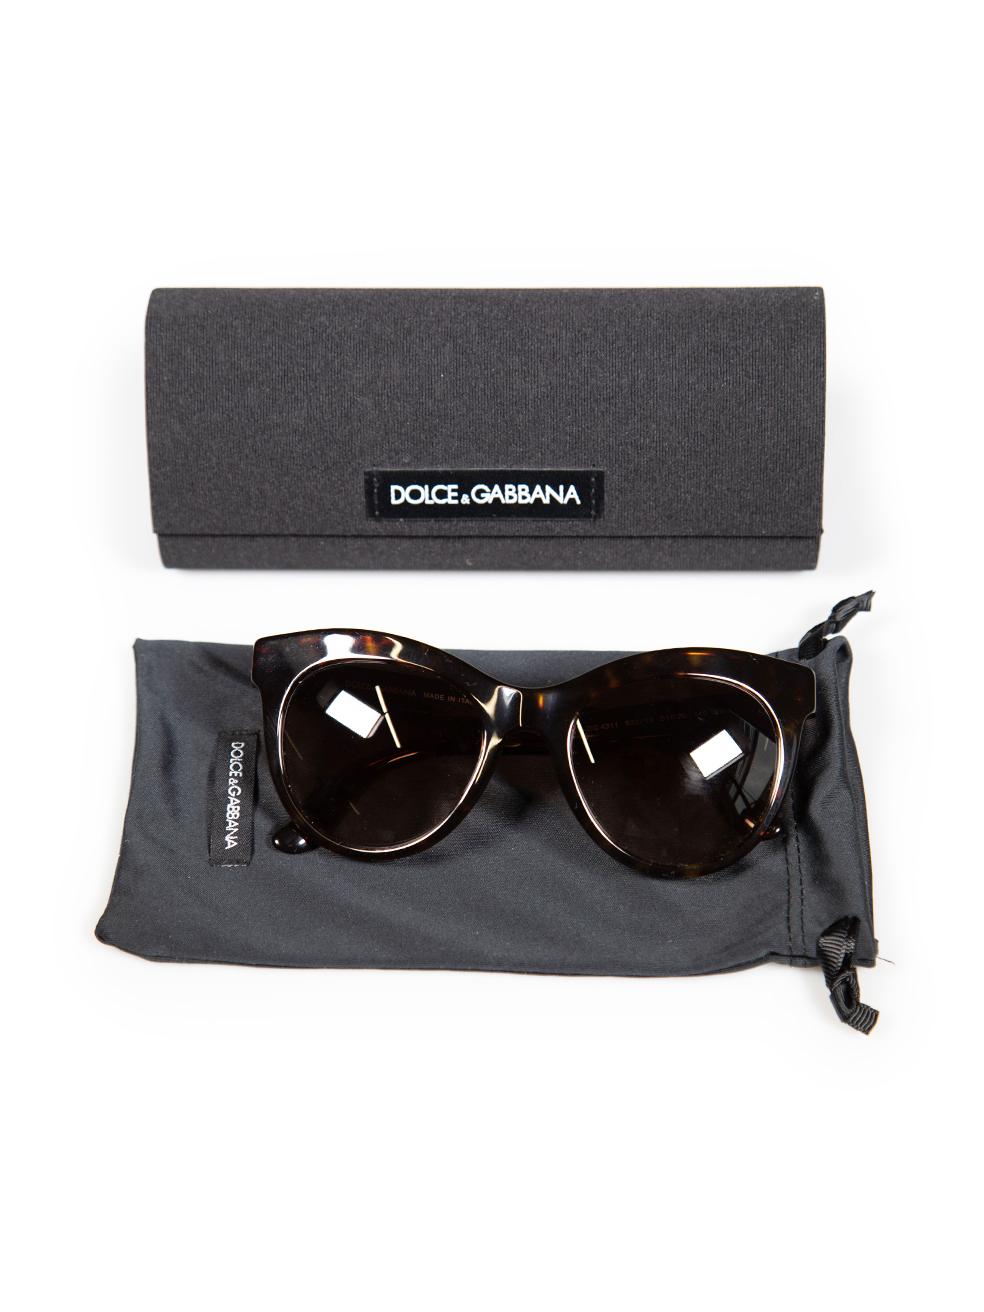 Dolce & Gabbana Brown Gradient Tortoiseshell Sunglasses For Sale 1